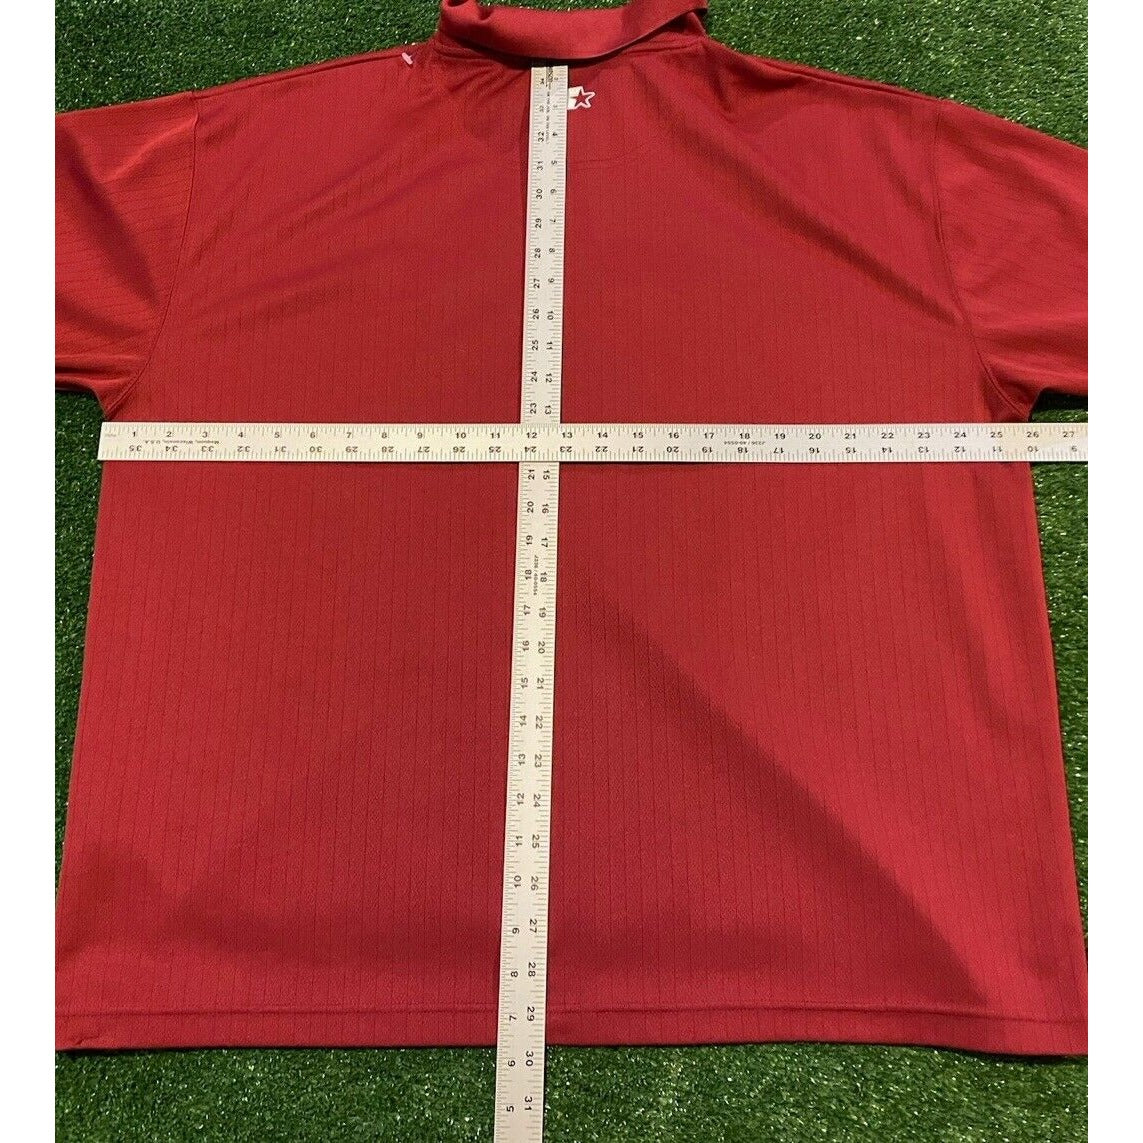 Vintage Arkansas Razorbacks shirt extra large golf polo Starter Retro adult mens